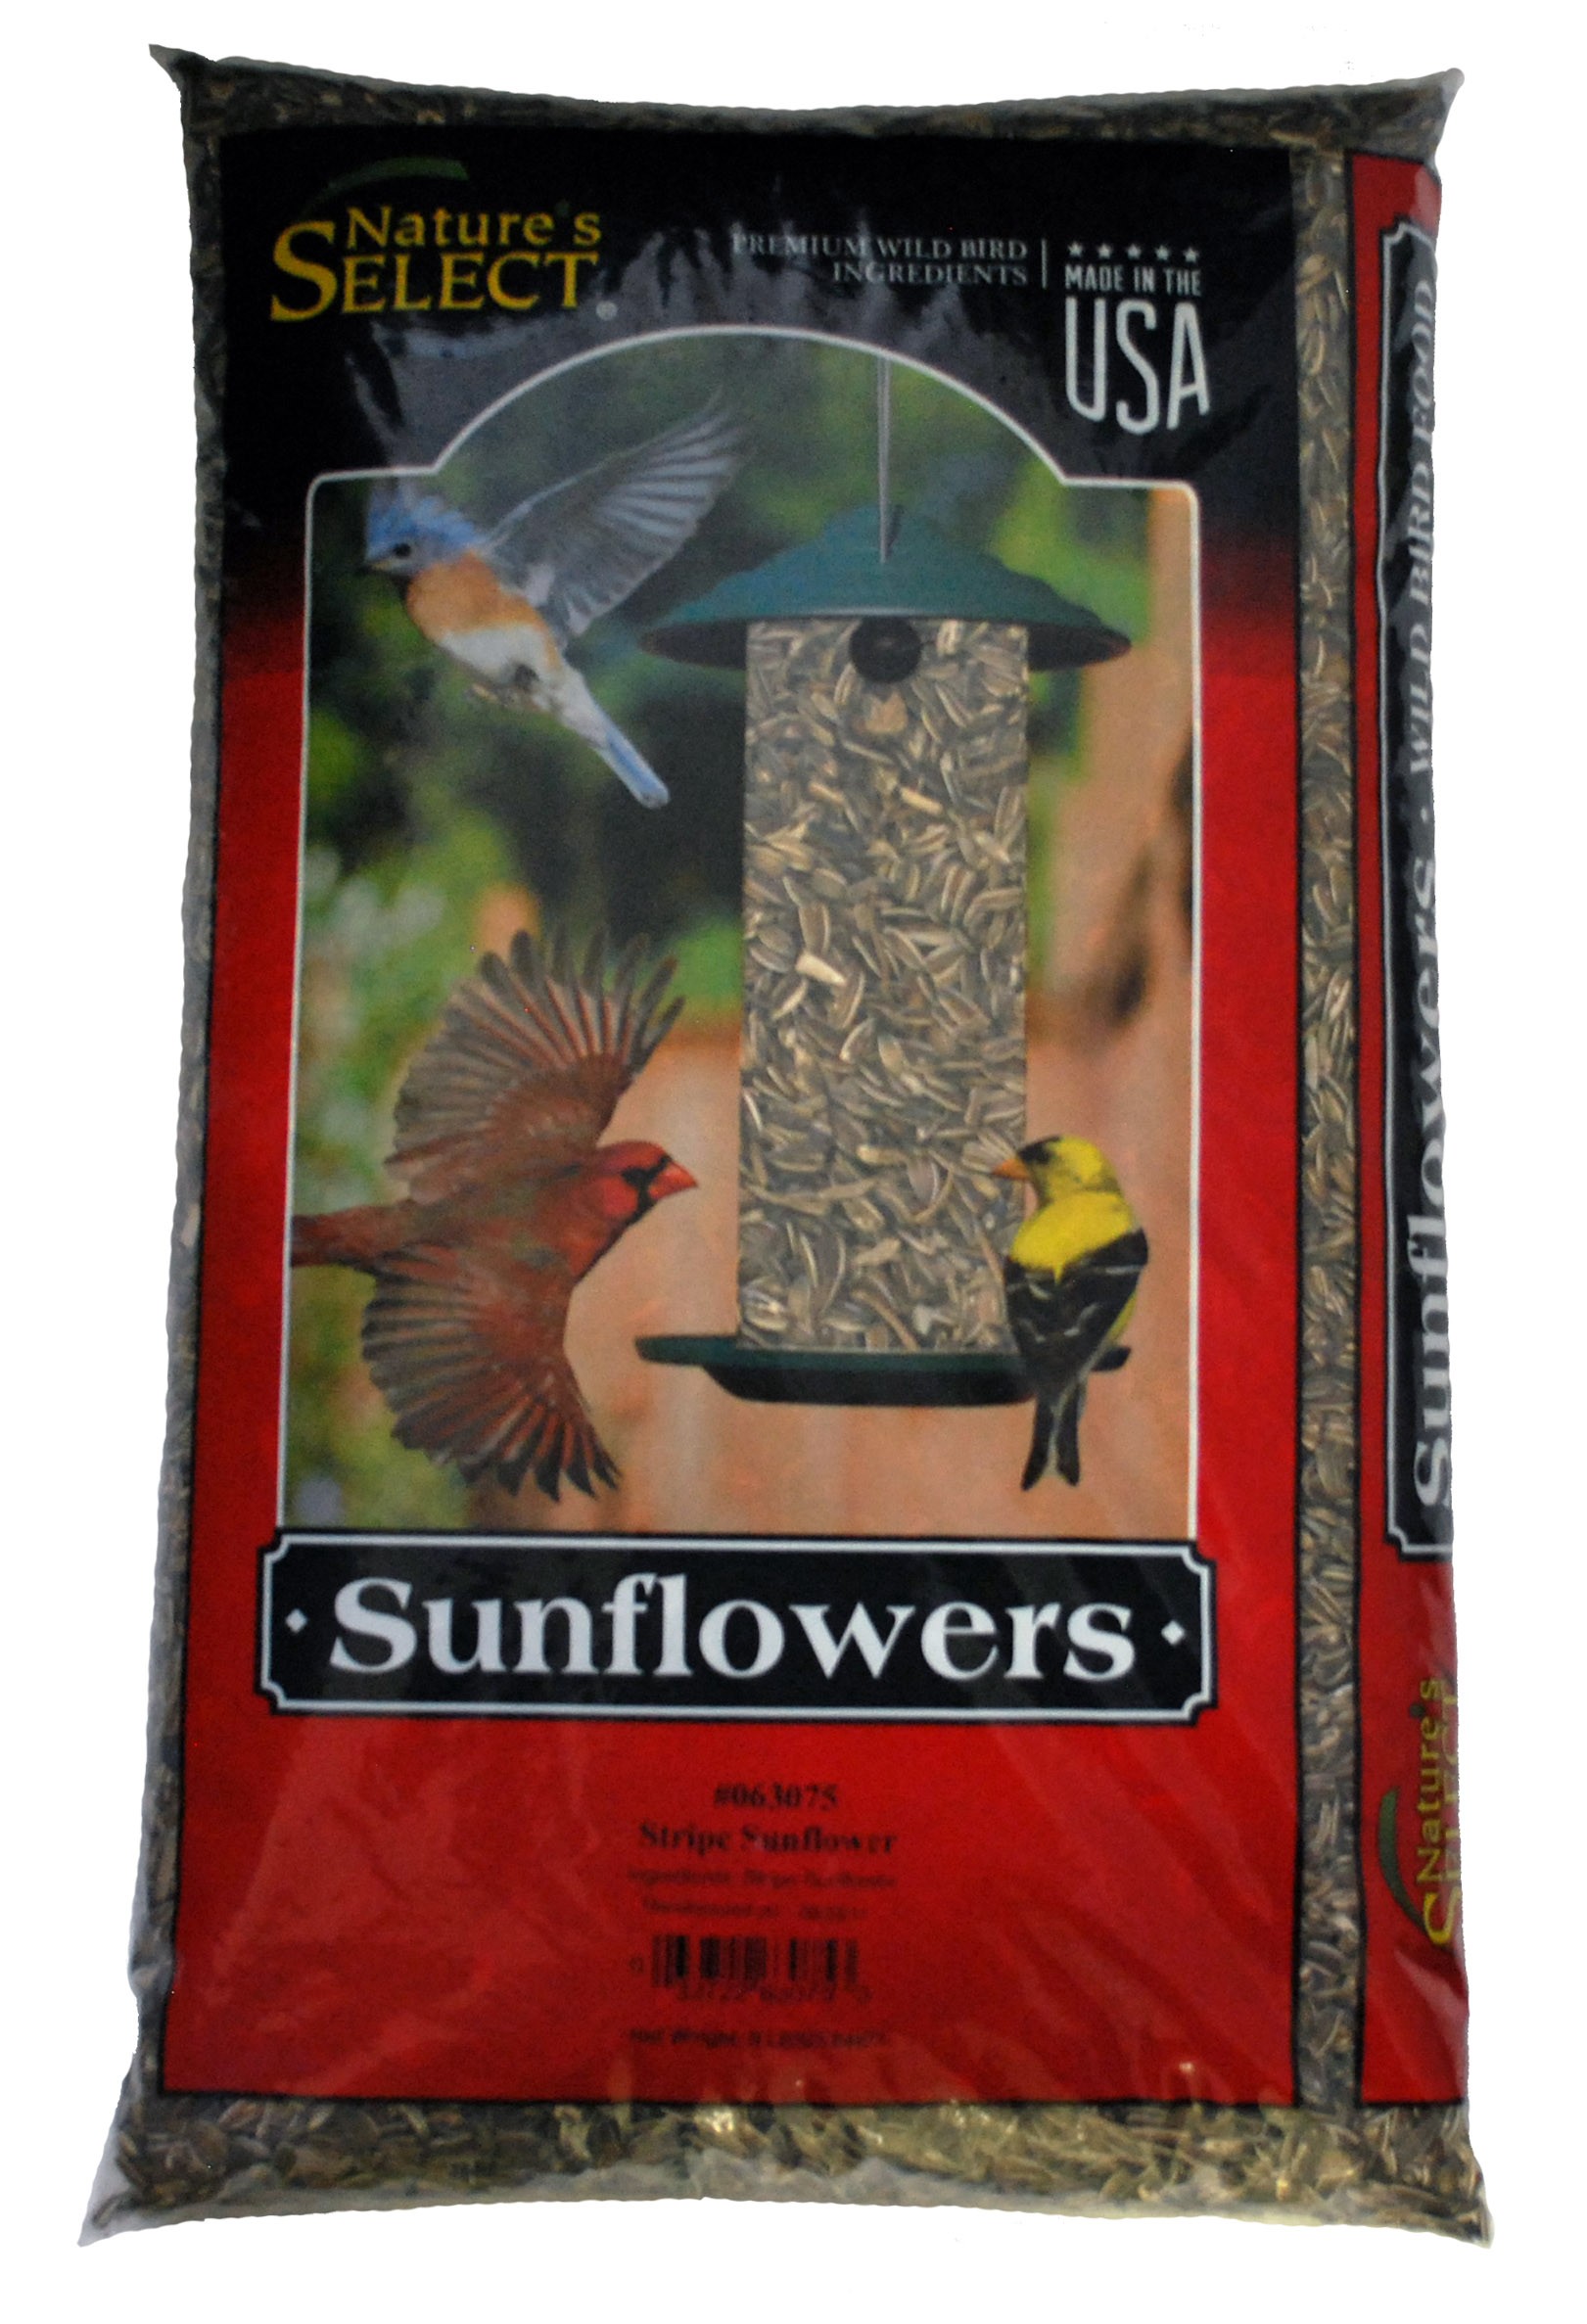 Striped Sunflower Seeds, 8 LB